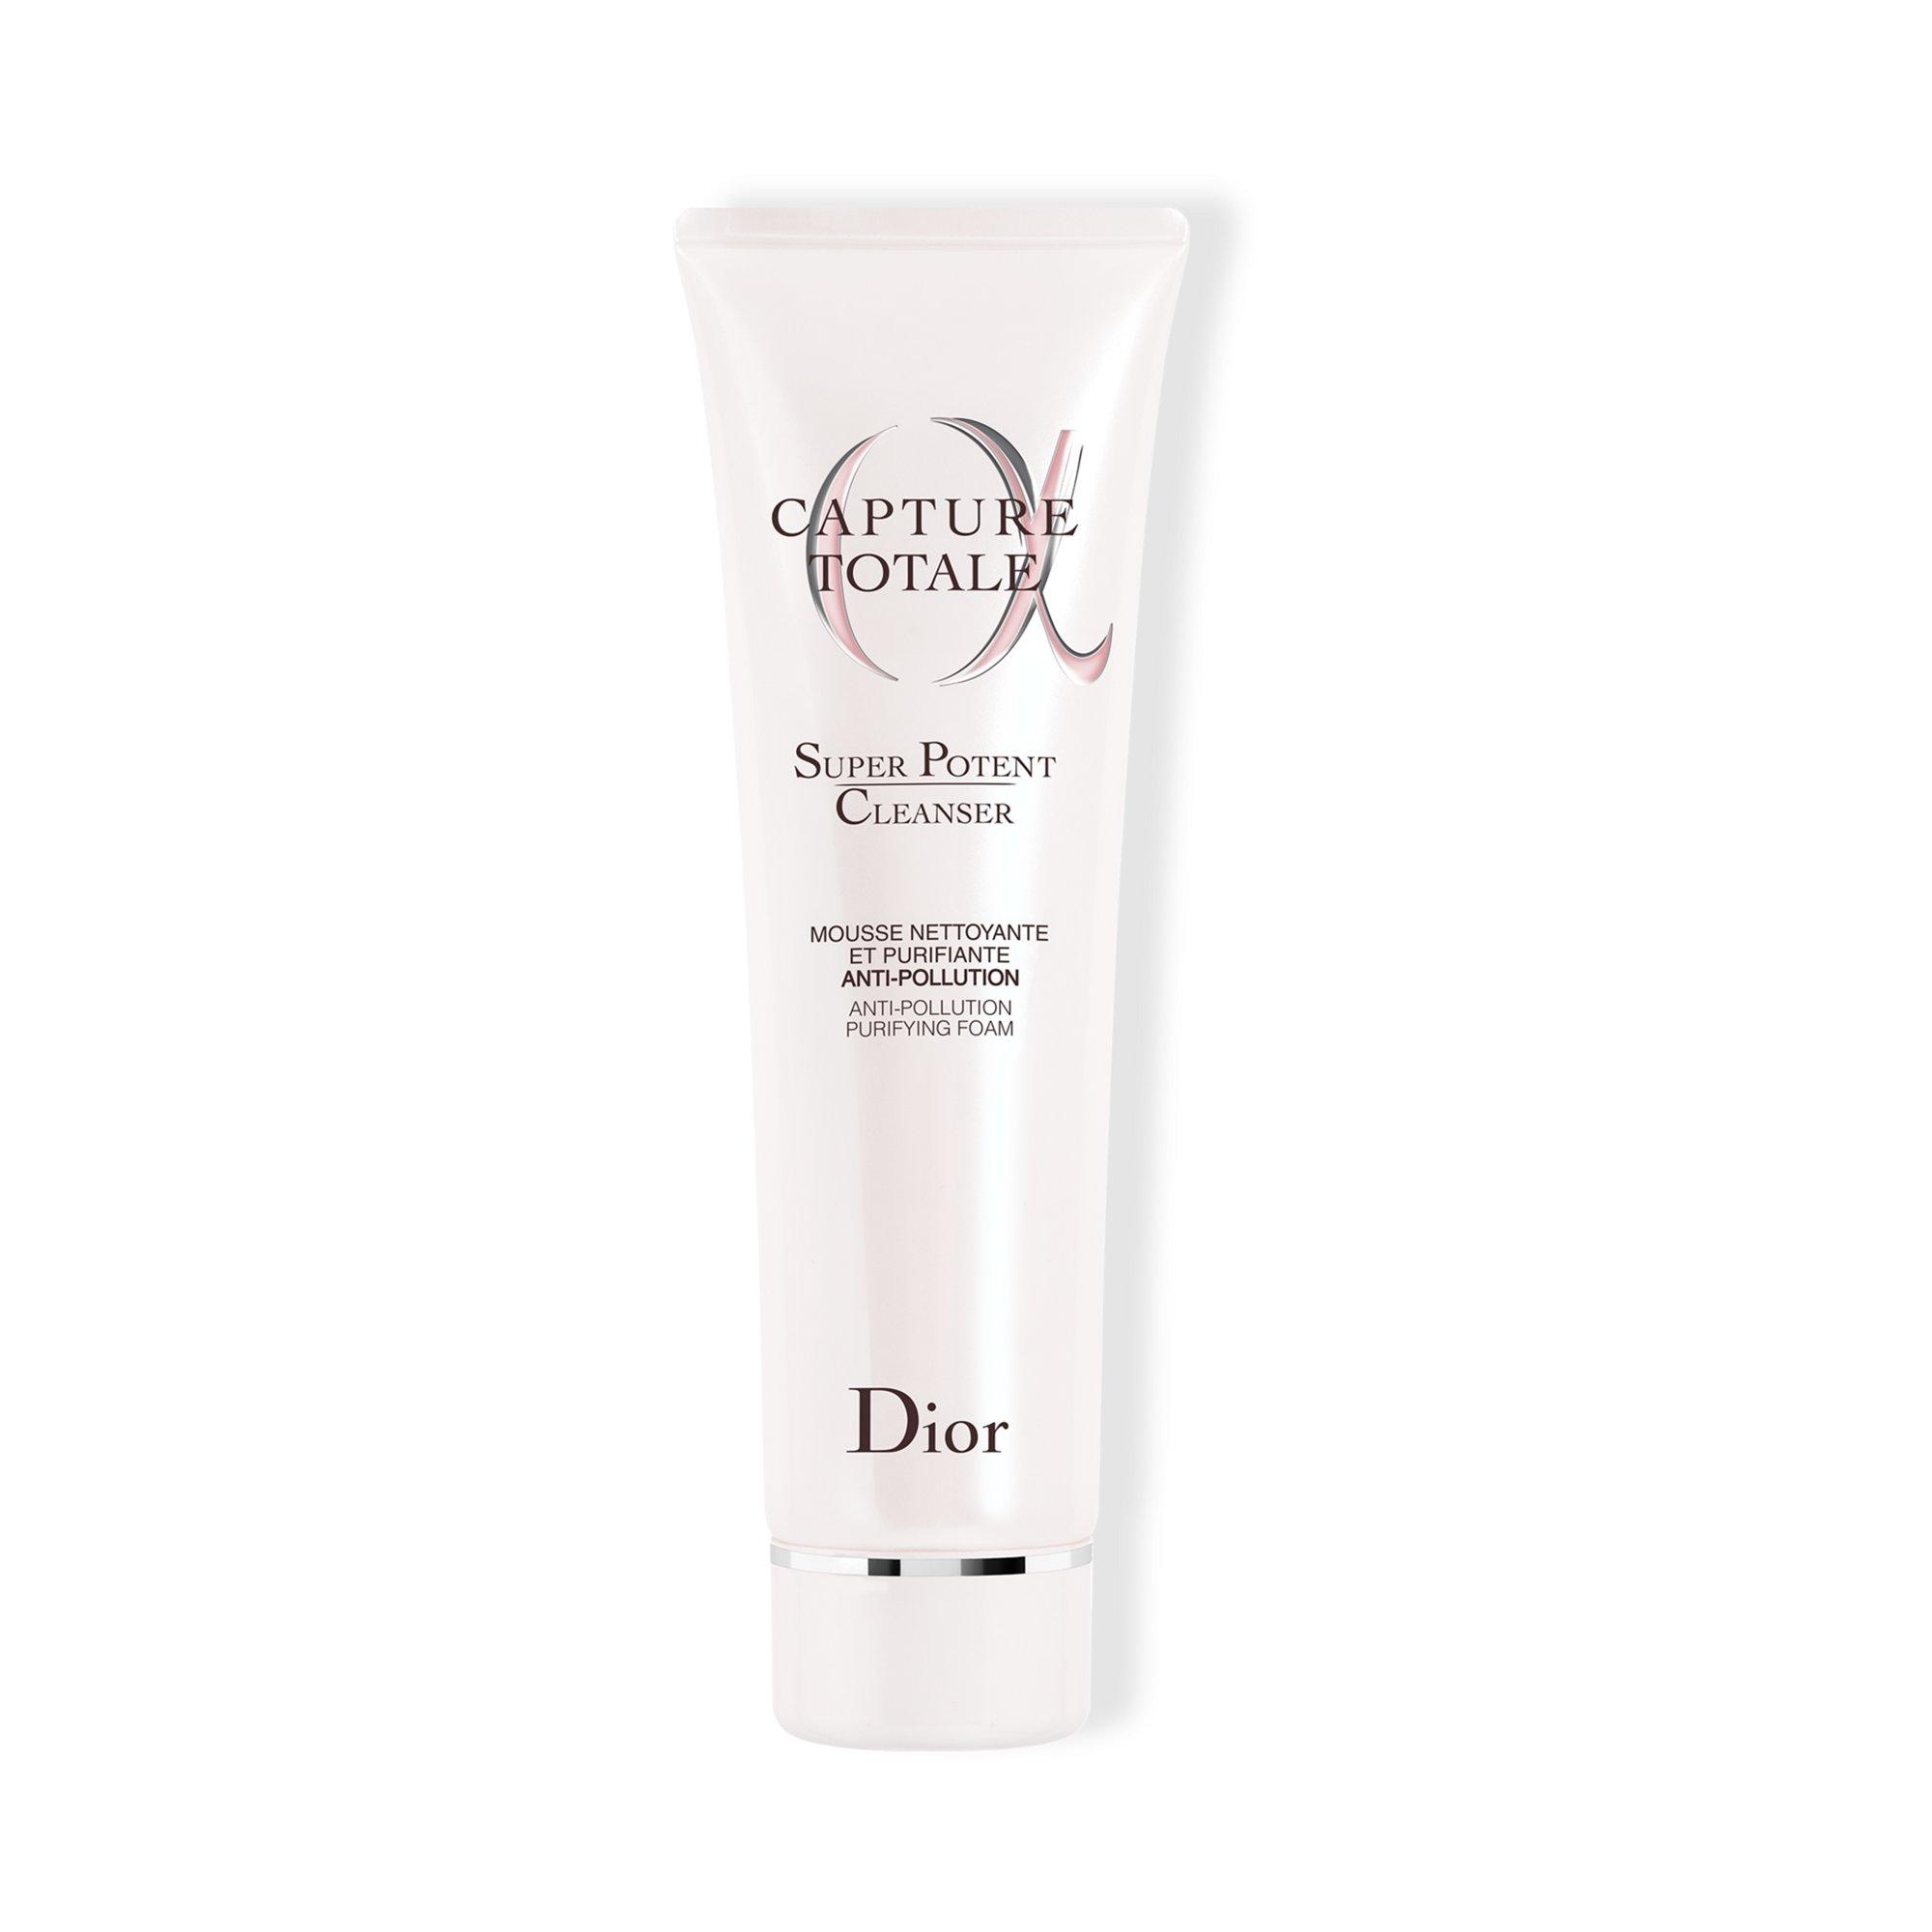 Image of Dior C/TOT SUPER POTENT CLEANSER Capture Totale Super Potent Cleanser - 150 ml